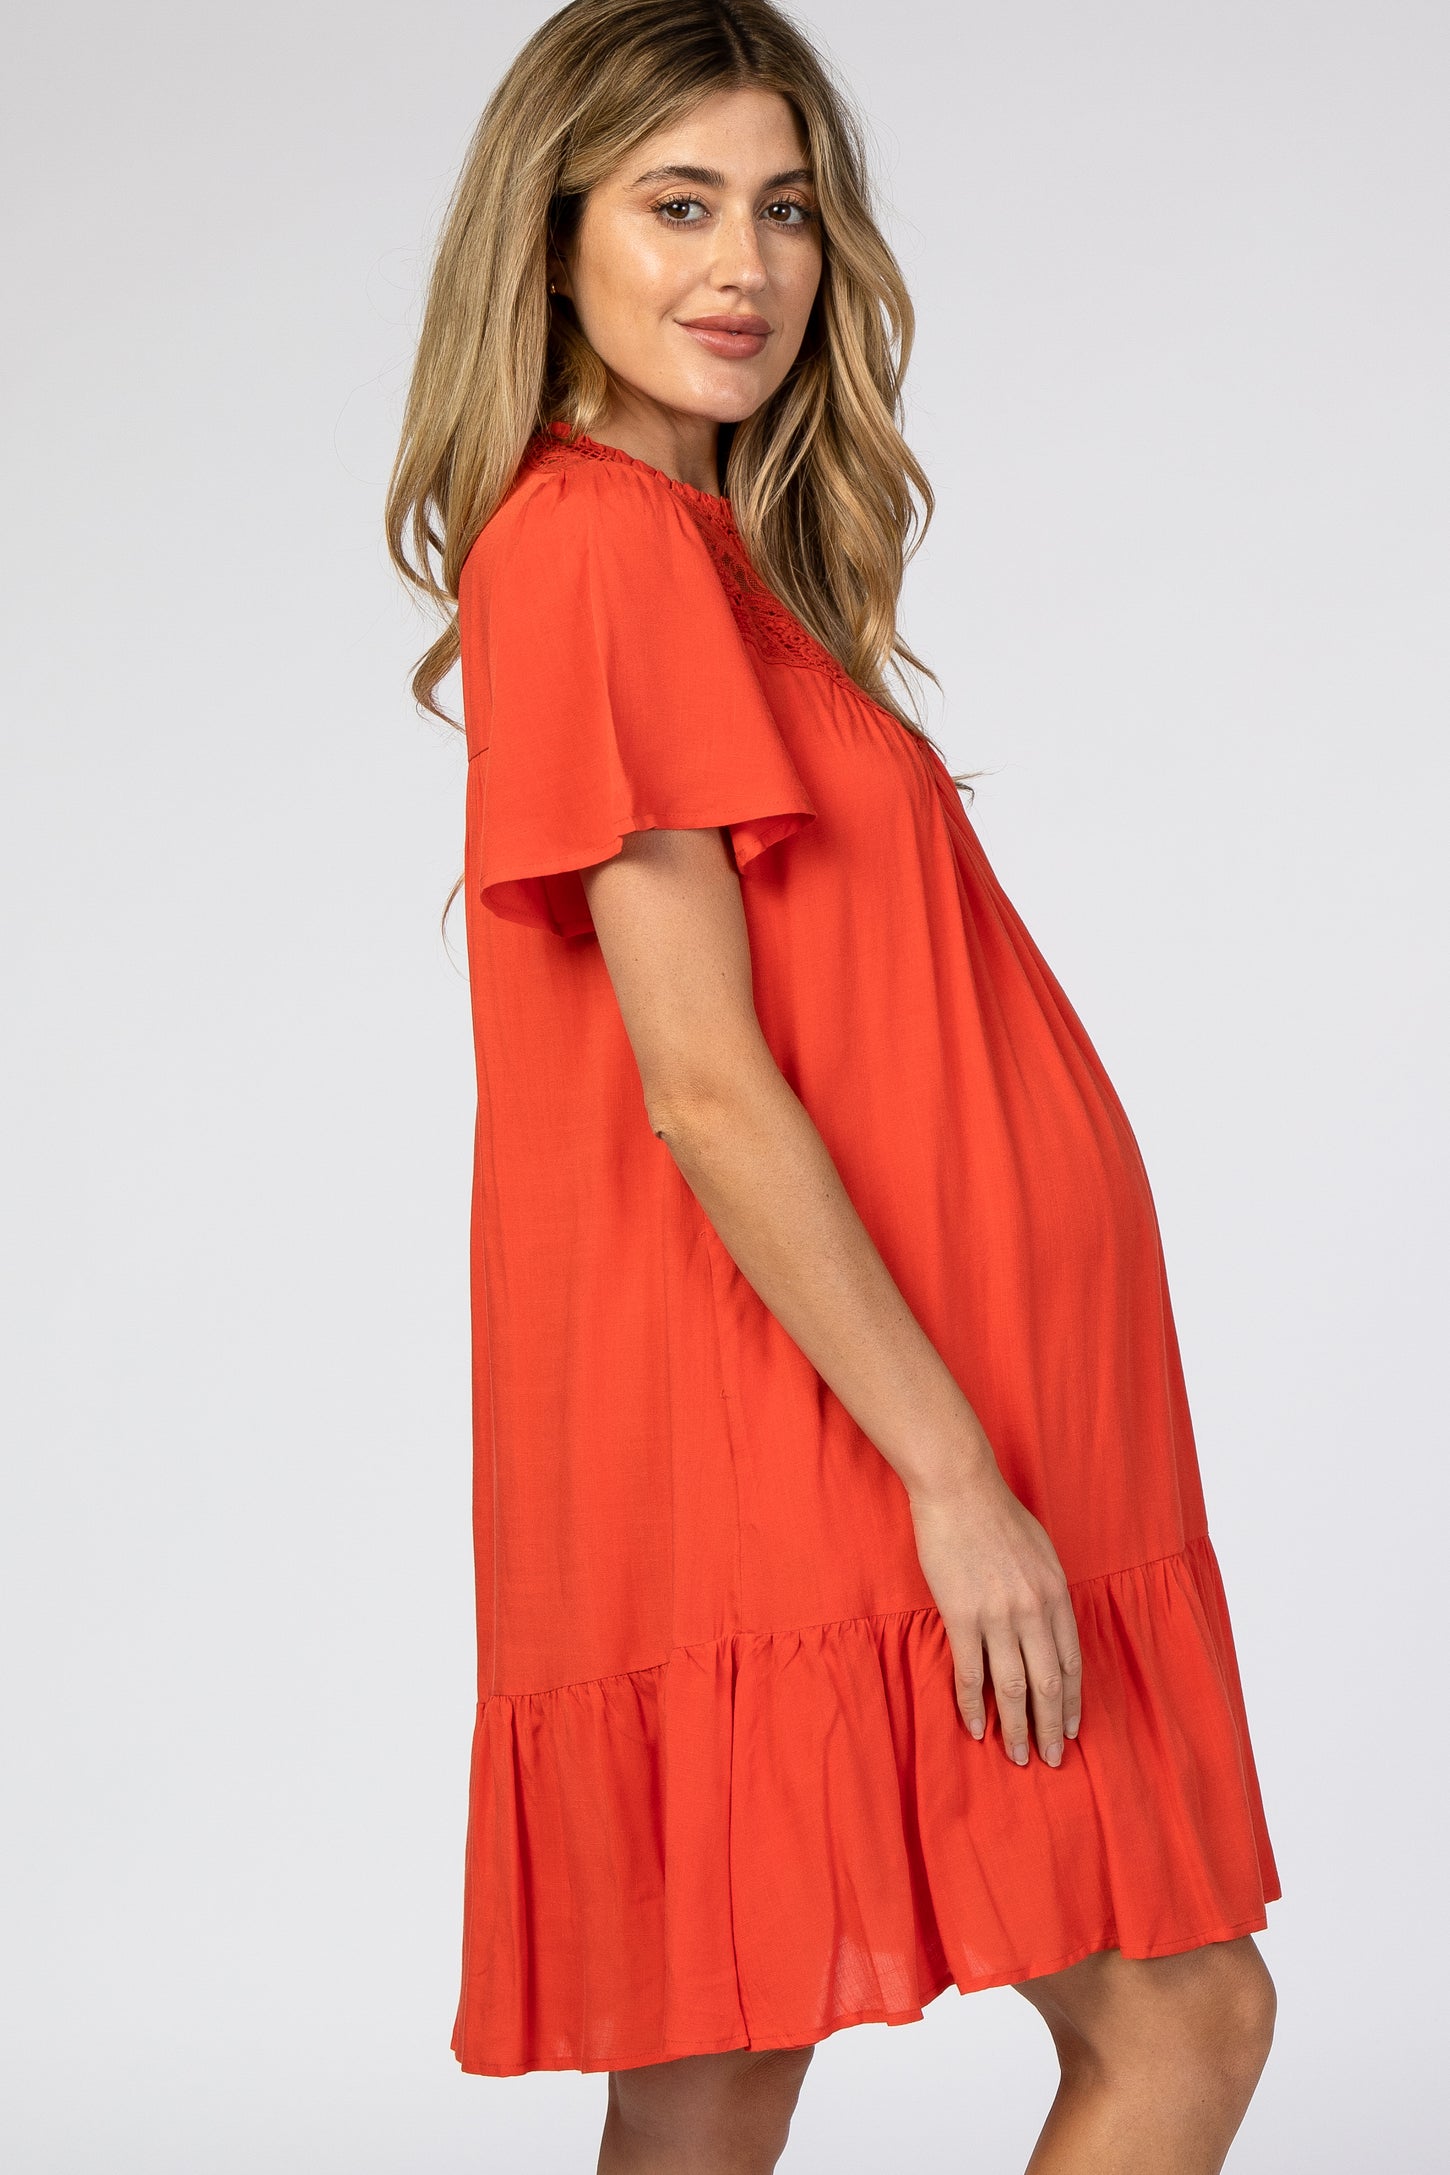 Orange Red Crochet Front Ruffle Hem Maternity Dress